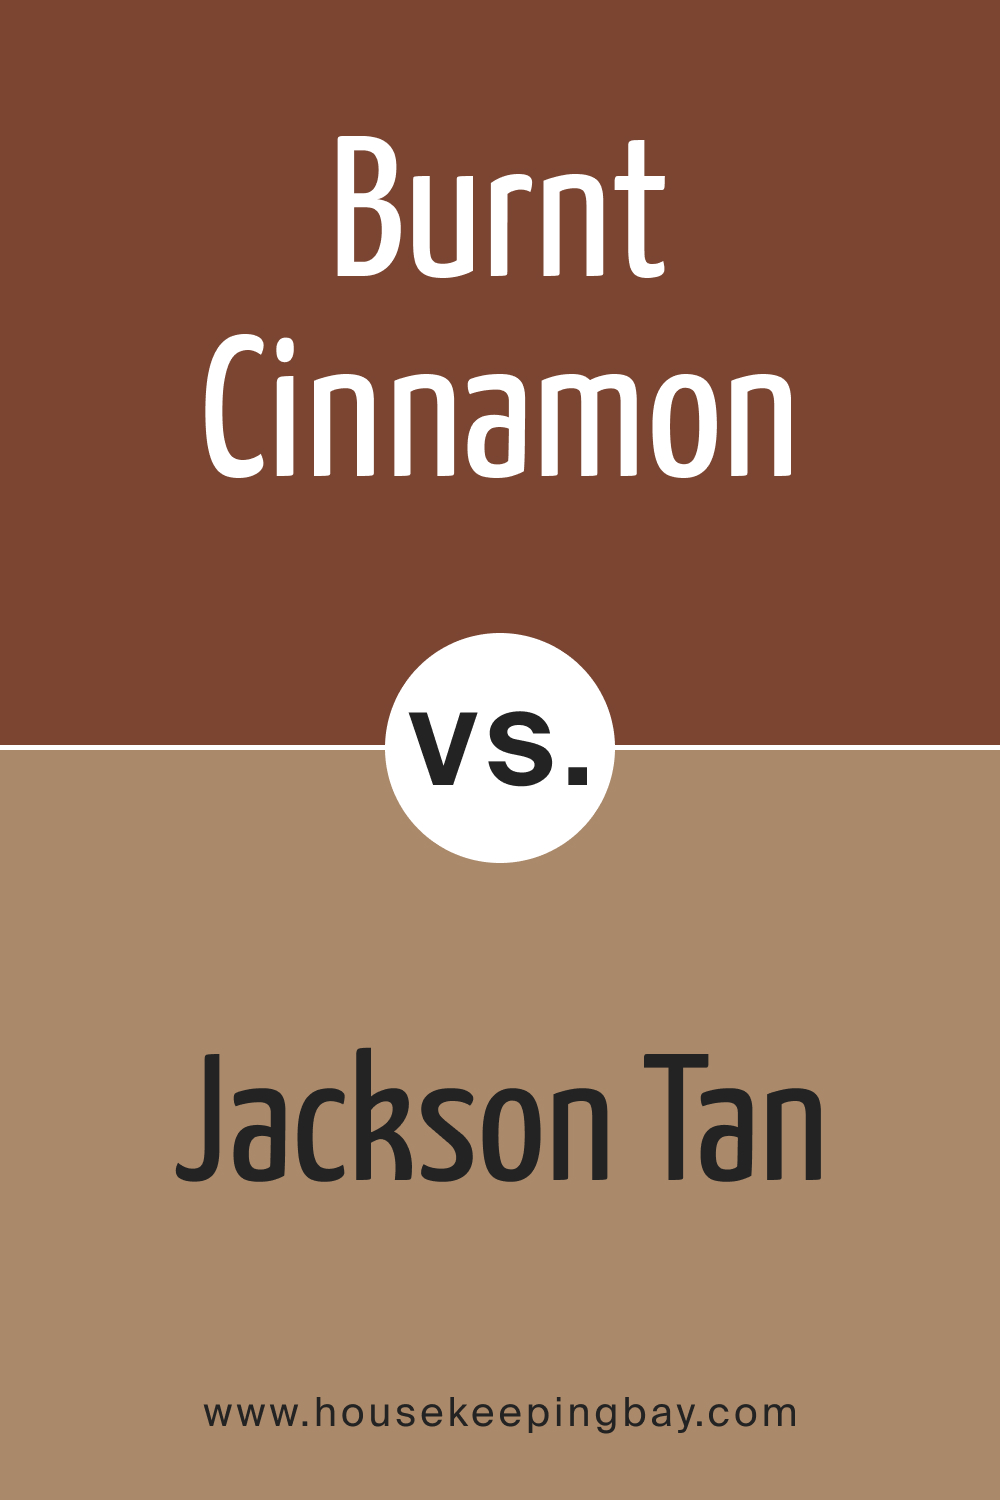 BM Burnt Cinnamon 2094-10 vs. HC-46 Jackson Tan